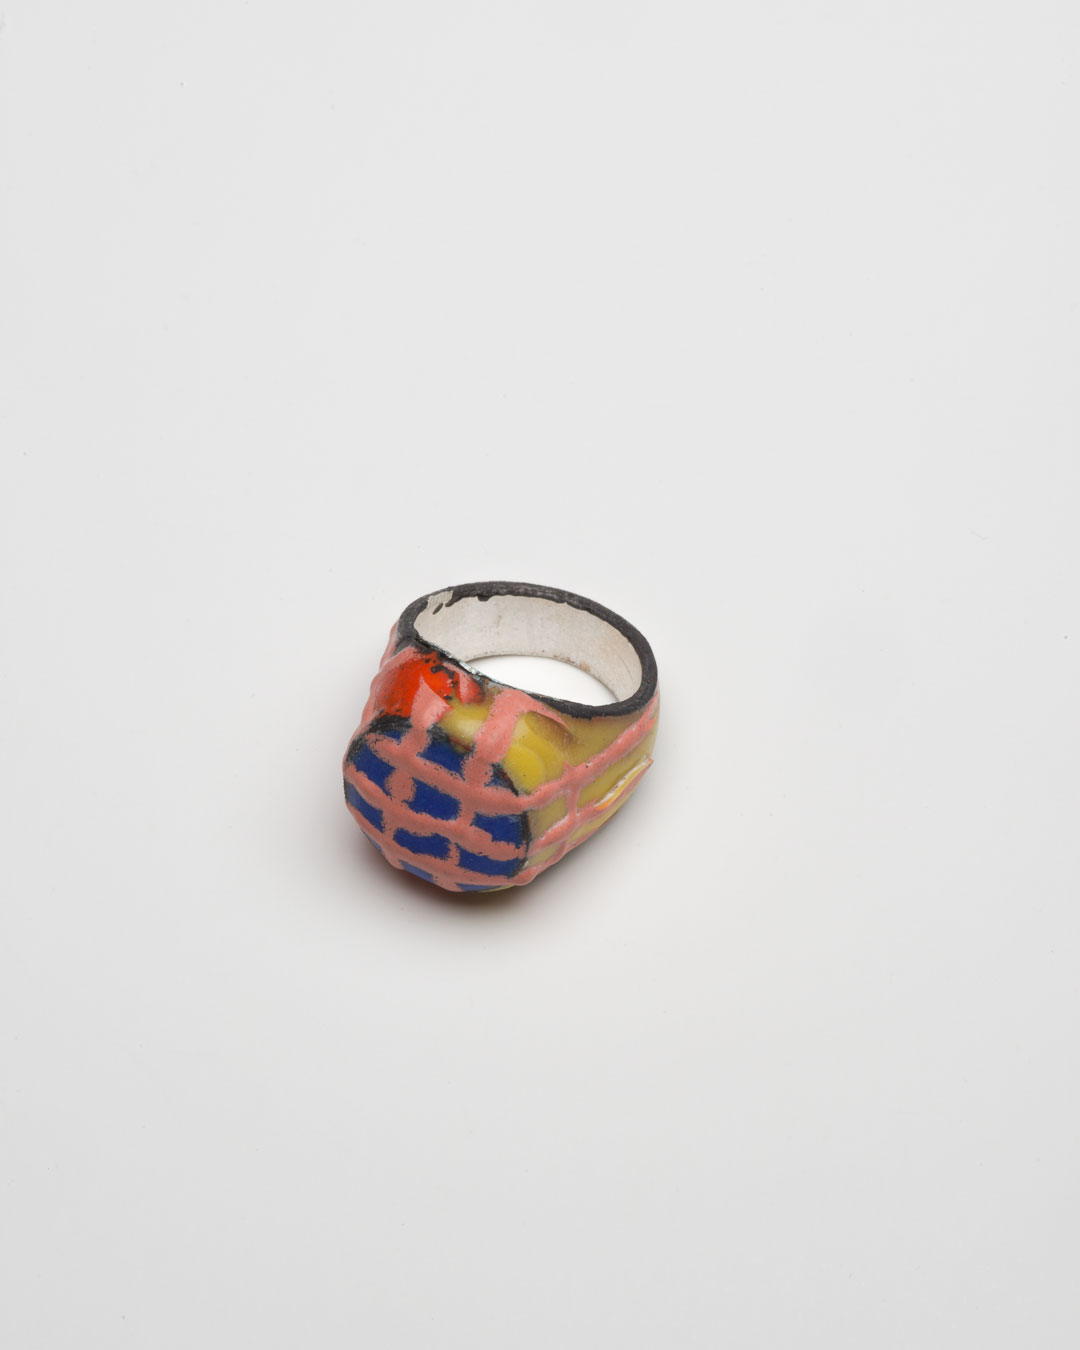 Aaron Decker, Magicring, 2018, ring; enamel, copper, silver, €1000